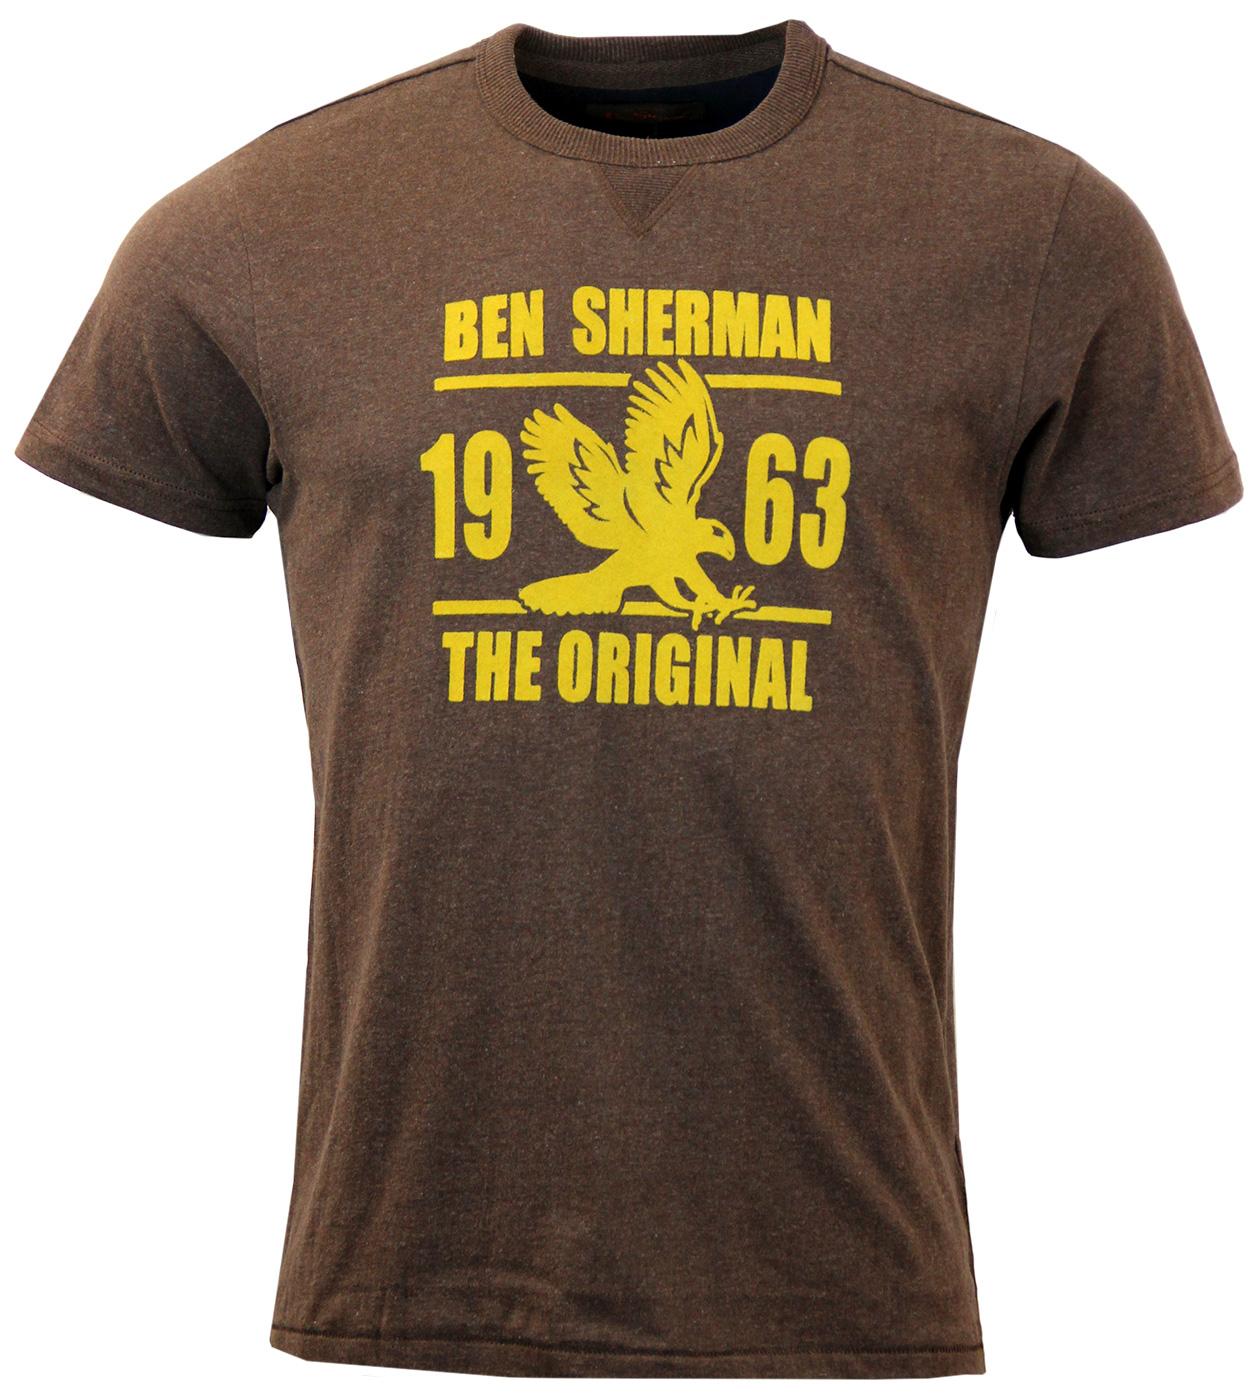 BEN SHERMAN Retro Indie Flock Print Eagle T-shirt